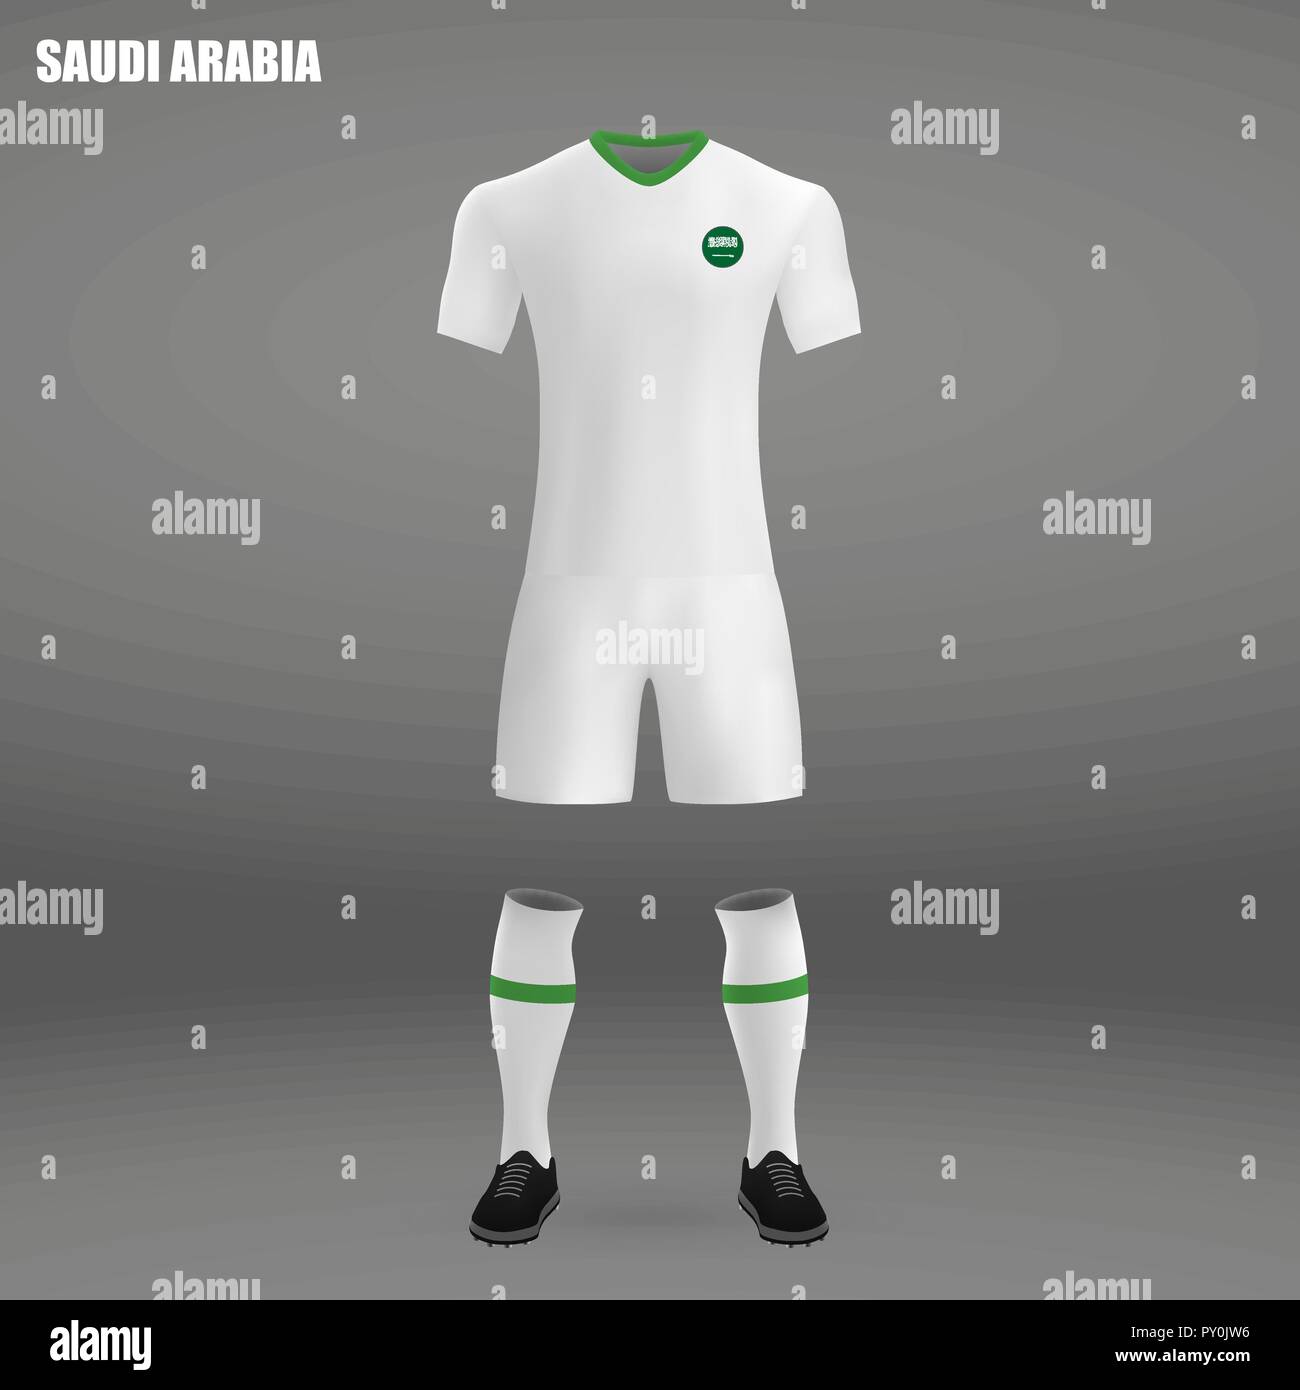 football kit of Saudi Arabia 2018, t-shirt template for soccer jersey ...